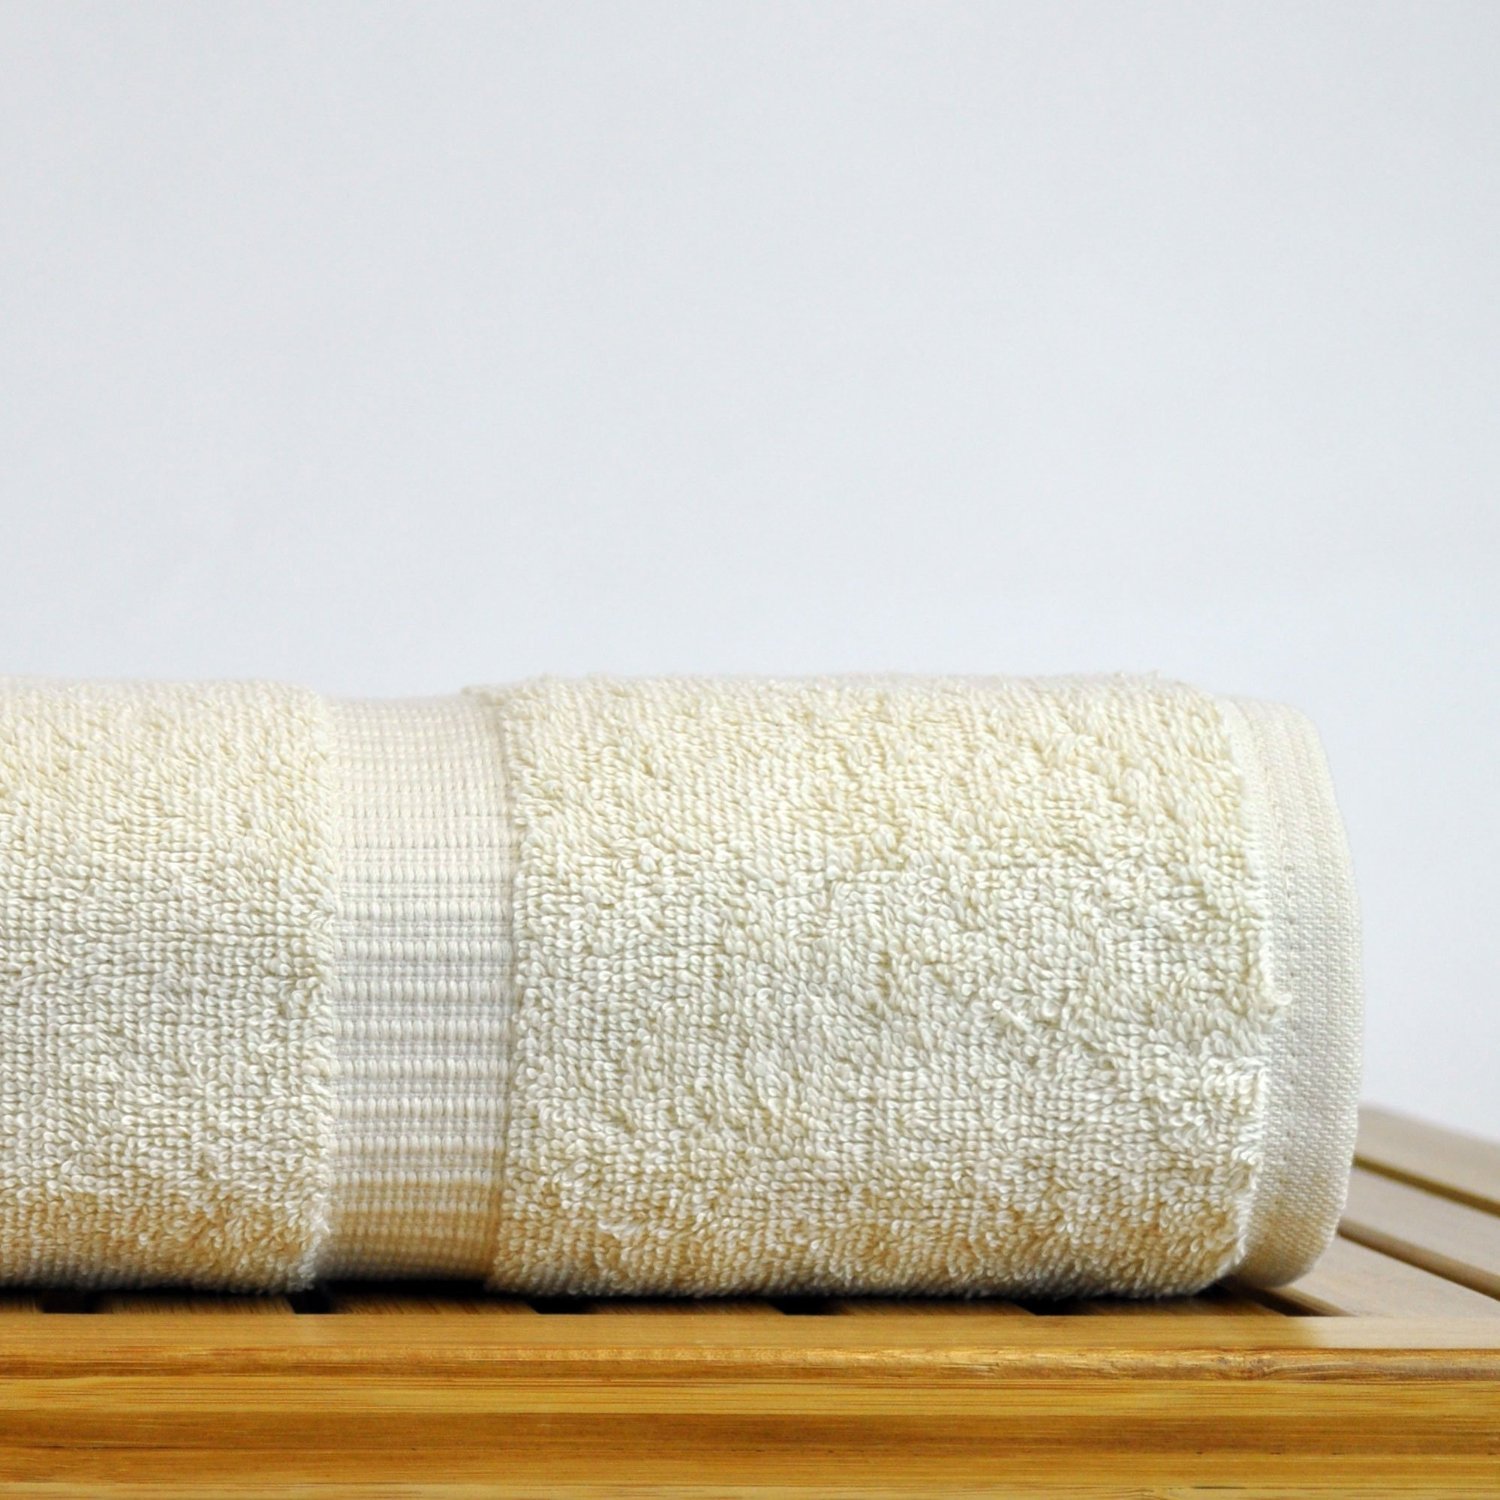 27" x 54" - 17 lbs/doz - %100 Turkish Cotton Beige Bath Towel - Dobby Border-Robemart.com